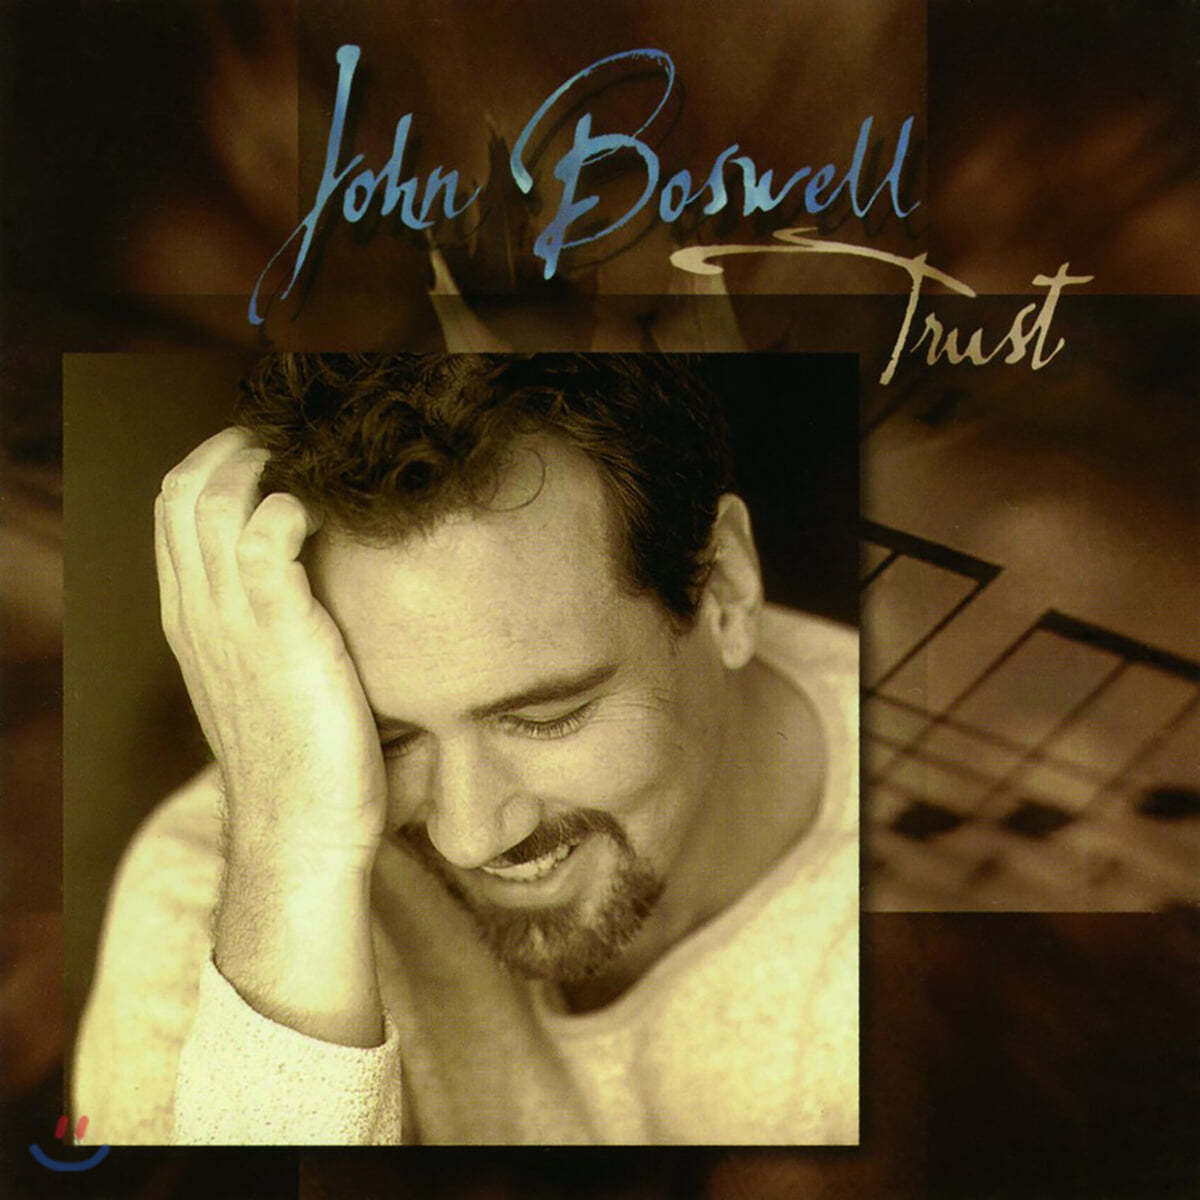 John Boswell (존 보스웰) - Trust